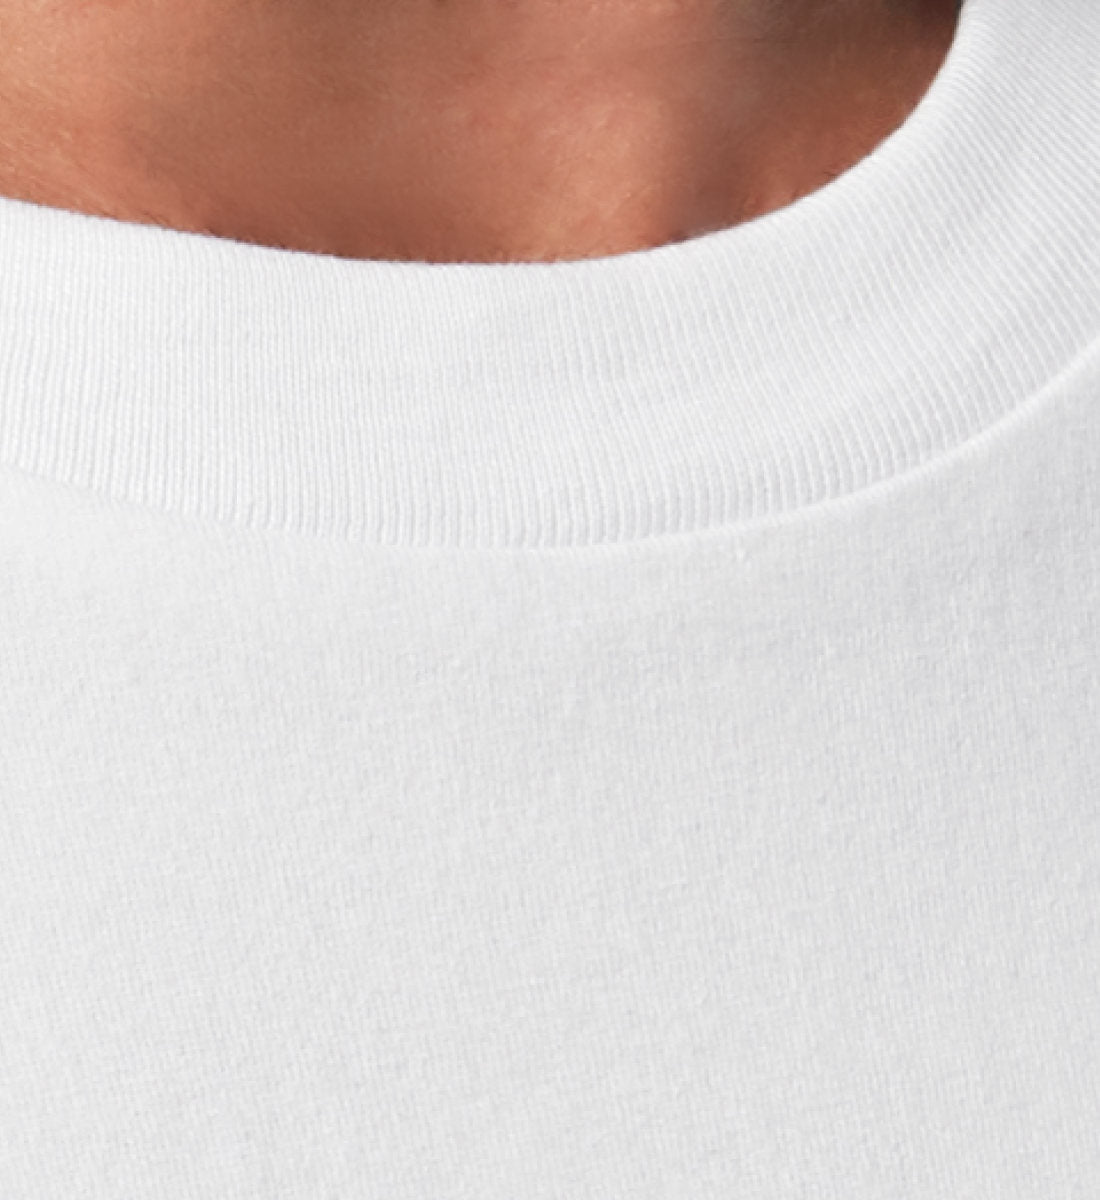 Weißes T-Shirt Unisex Relaxed Fit für Frauen und Männer bedruckt mit dem Design der Roger Rockawoo Kollektion and then skateboarding came along